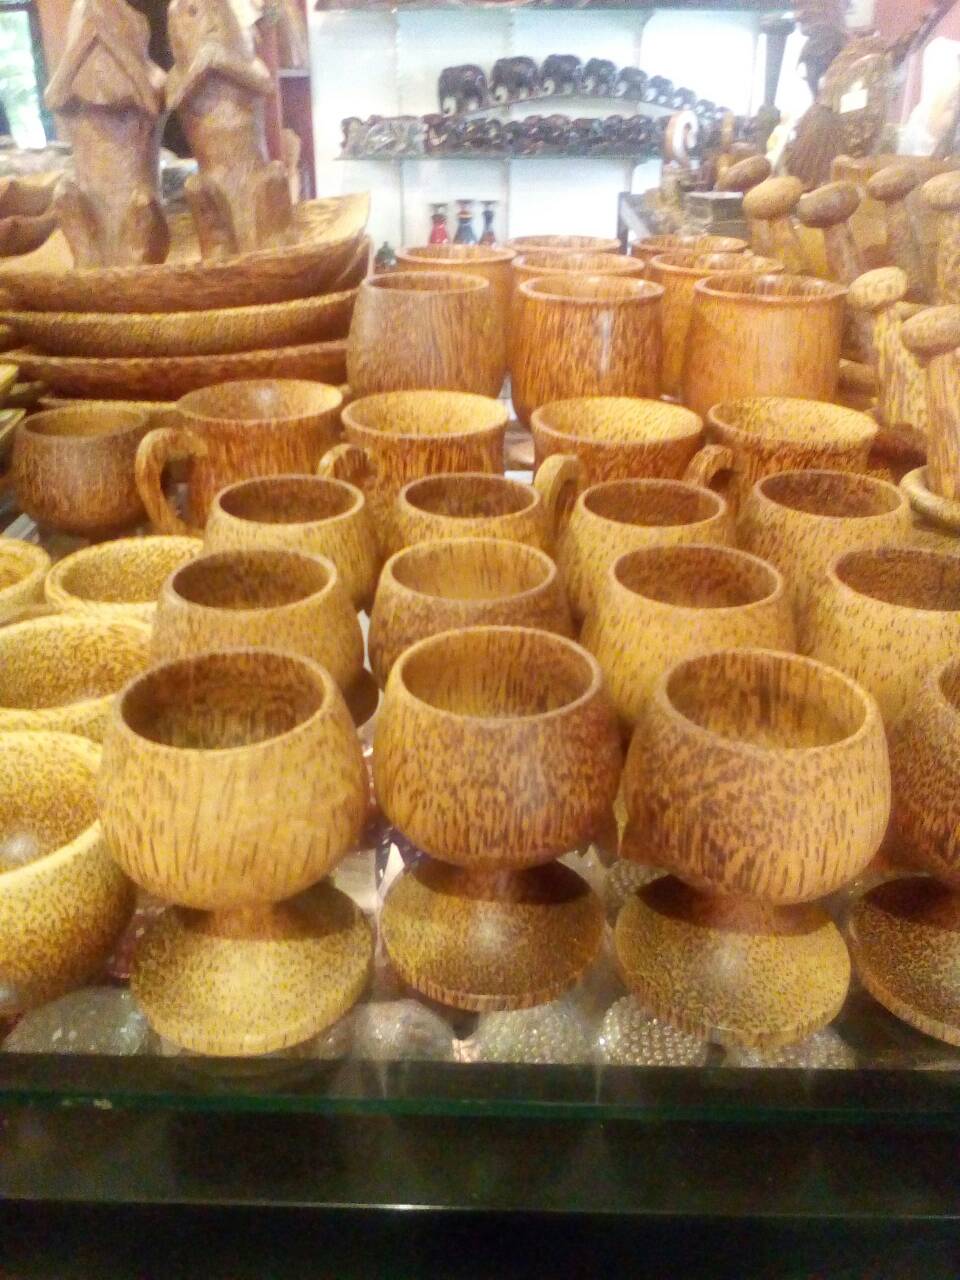 Kitchenware from Coconut, Sri Lanka